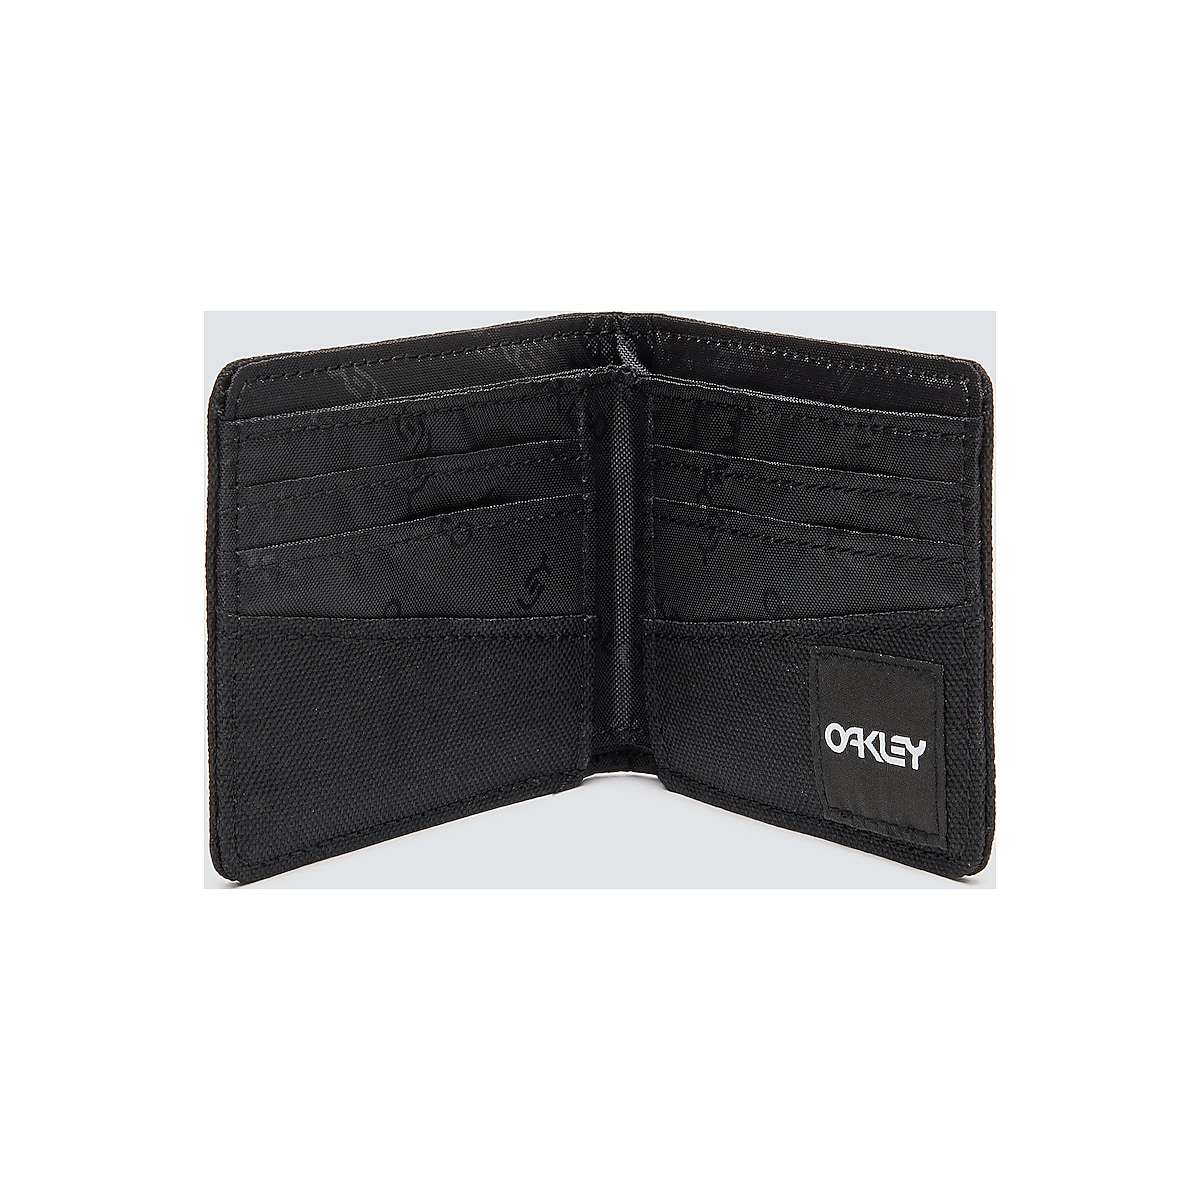 US POLO Association Black BiFold Leather Wallet For Men 